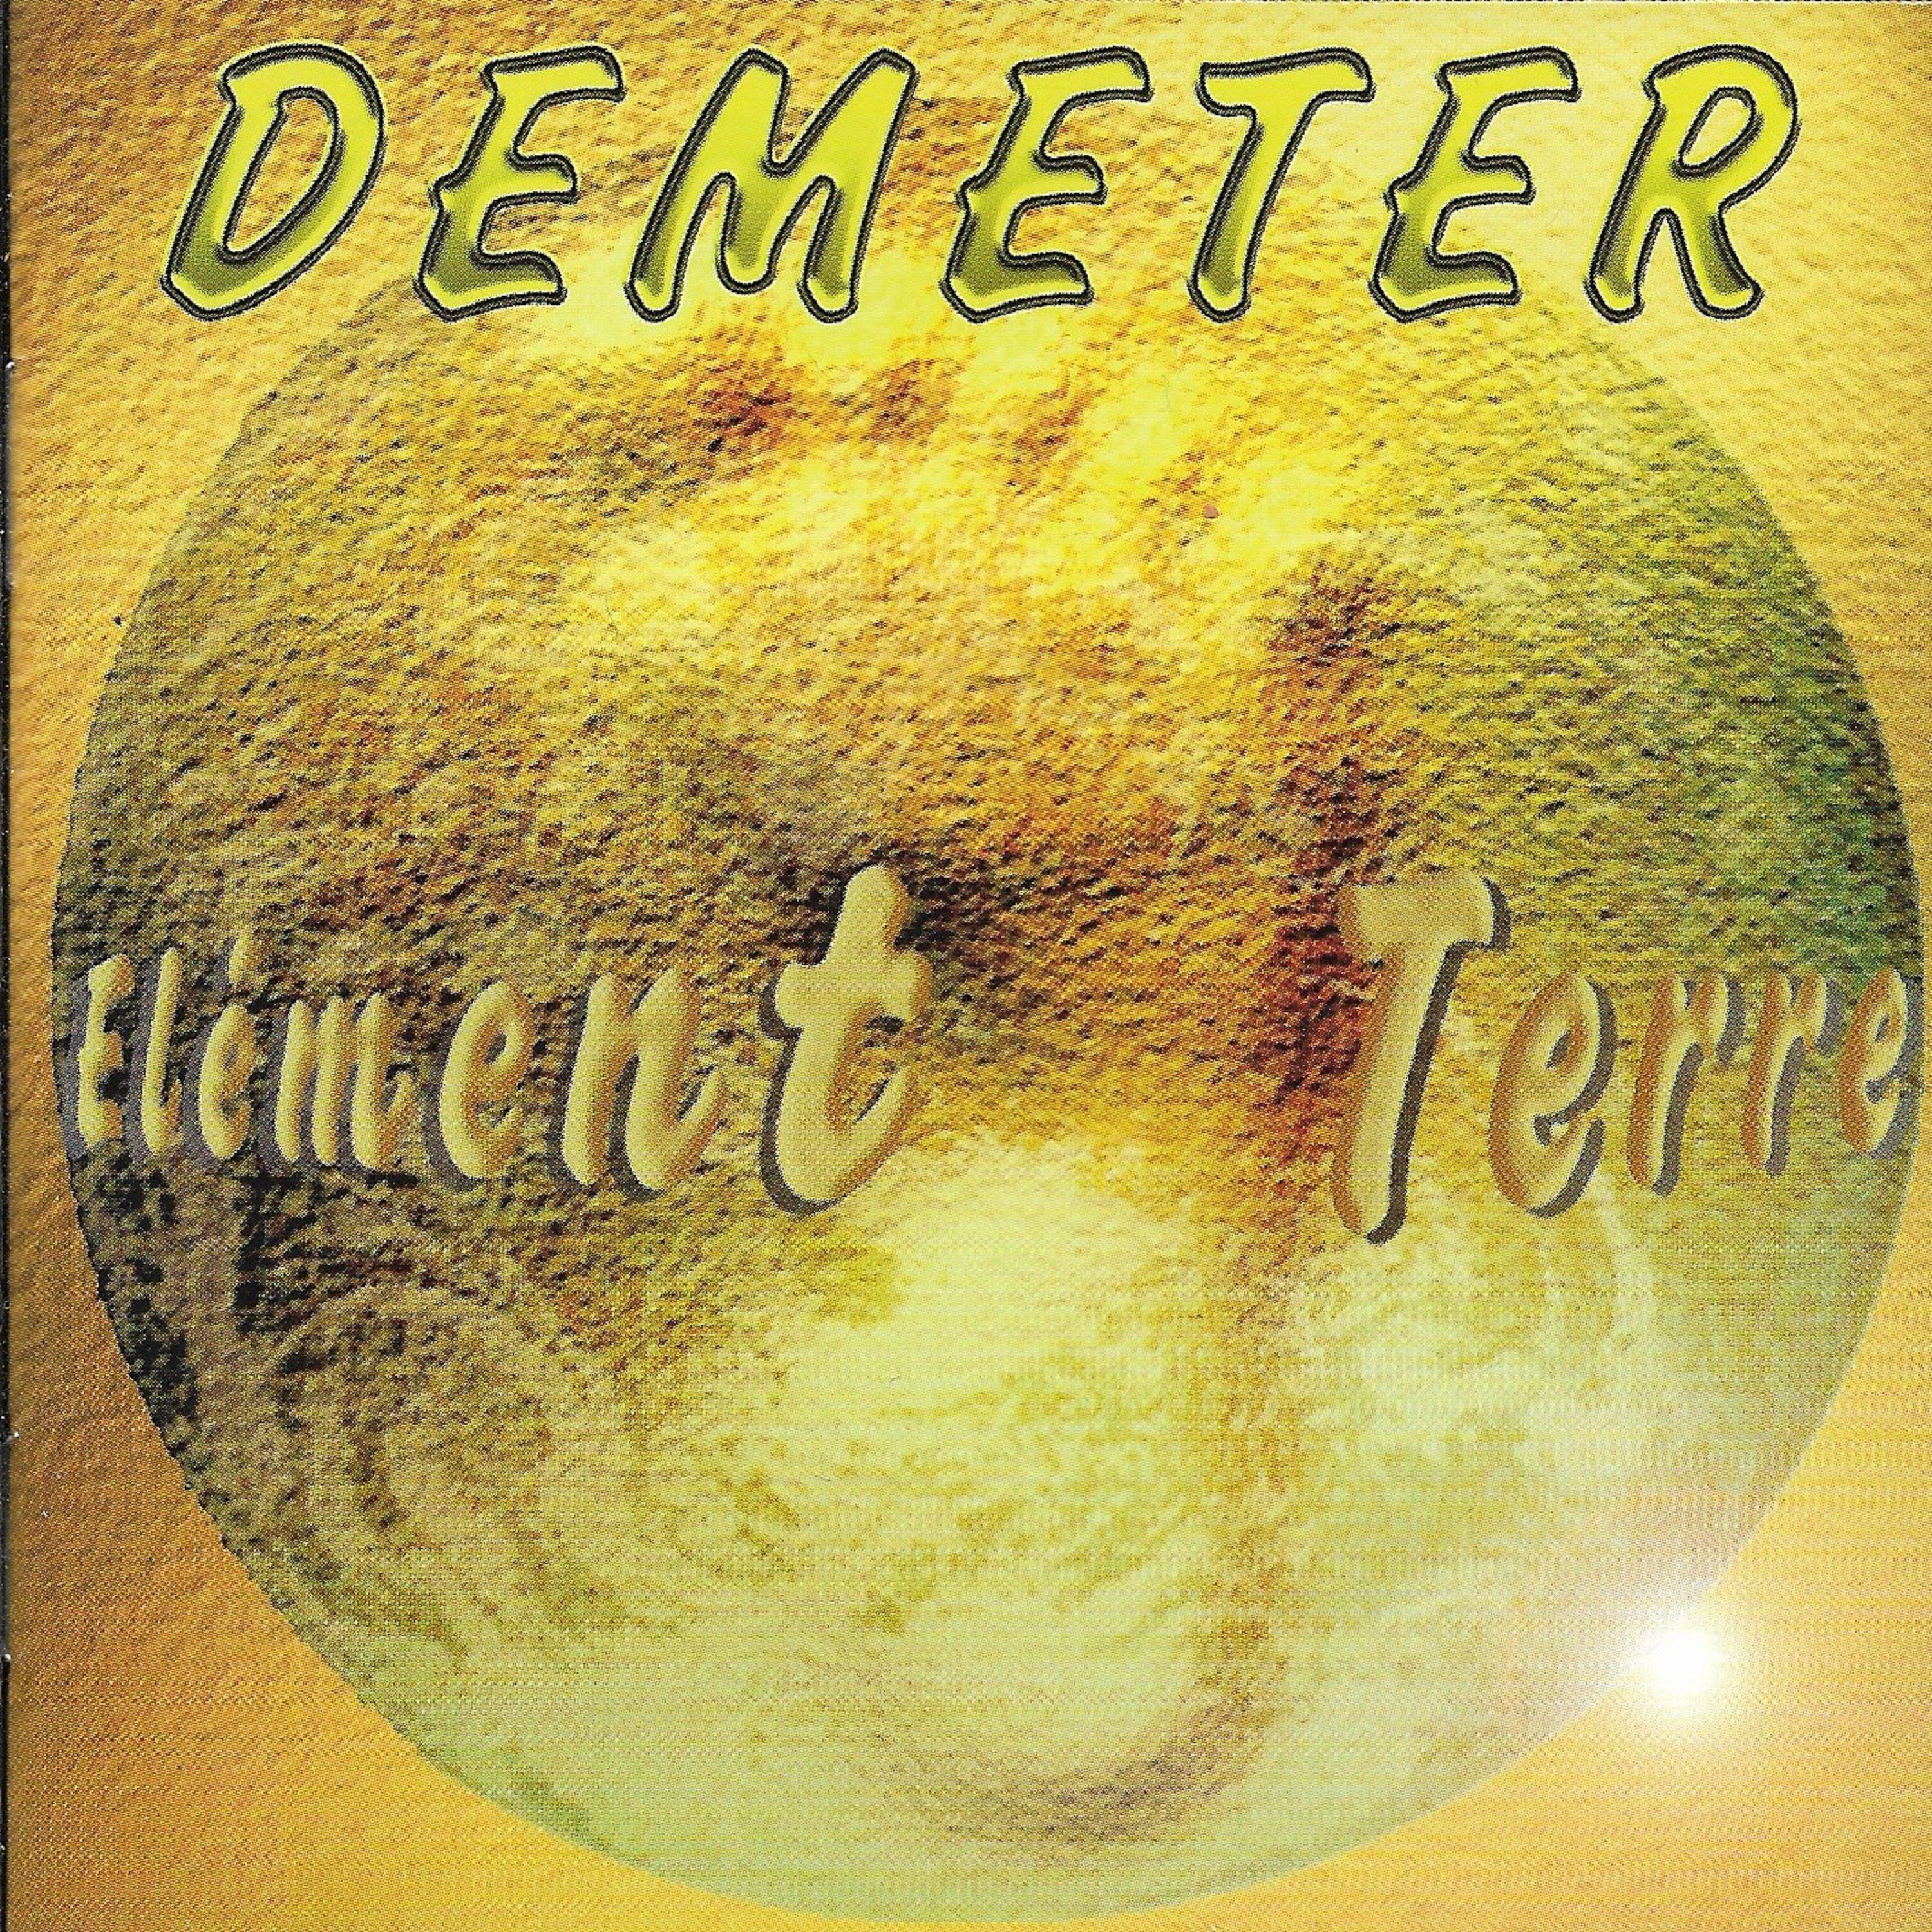 Demeter - Chute libre